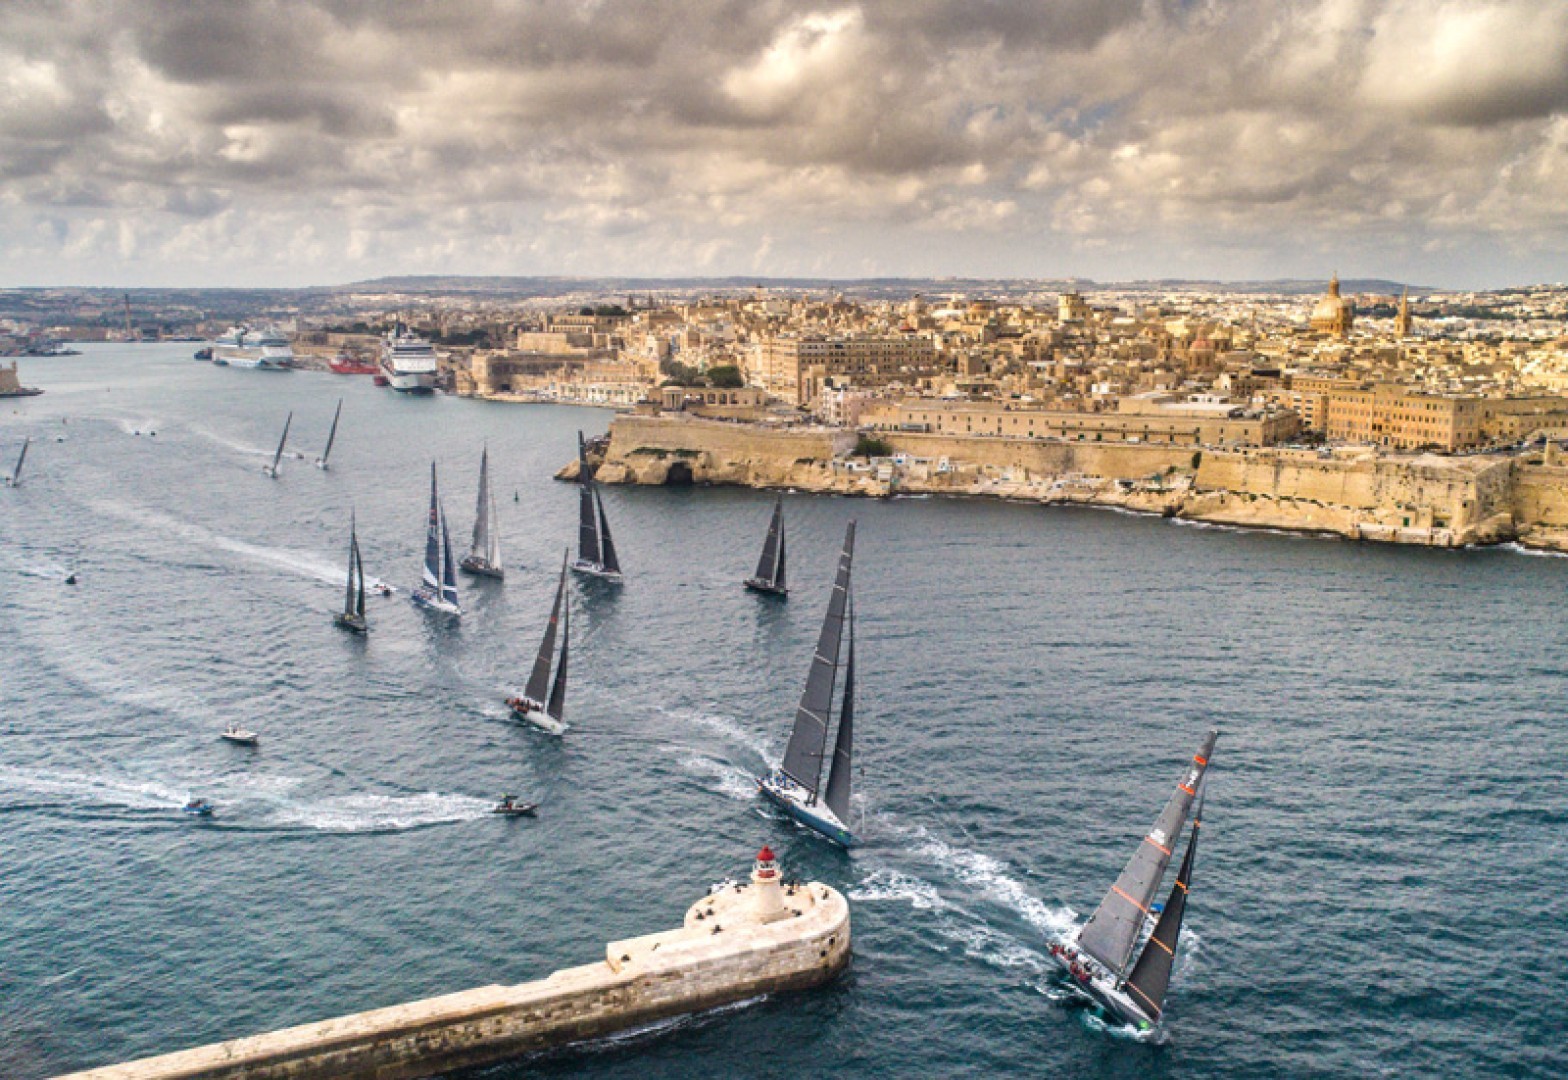 Rolex Middle Sea Race Fleet is Hotting Up